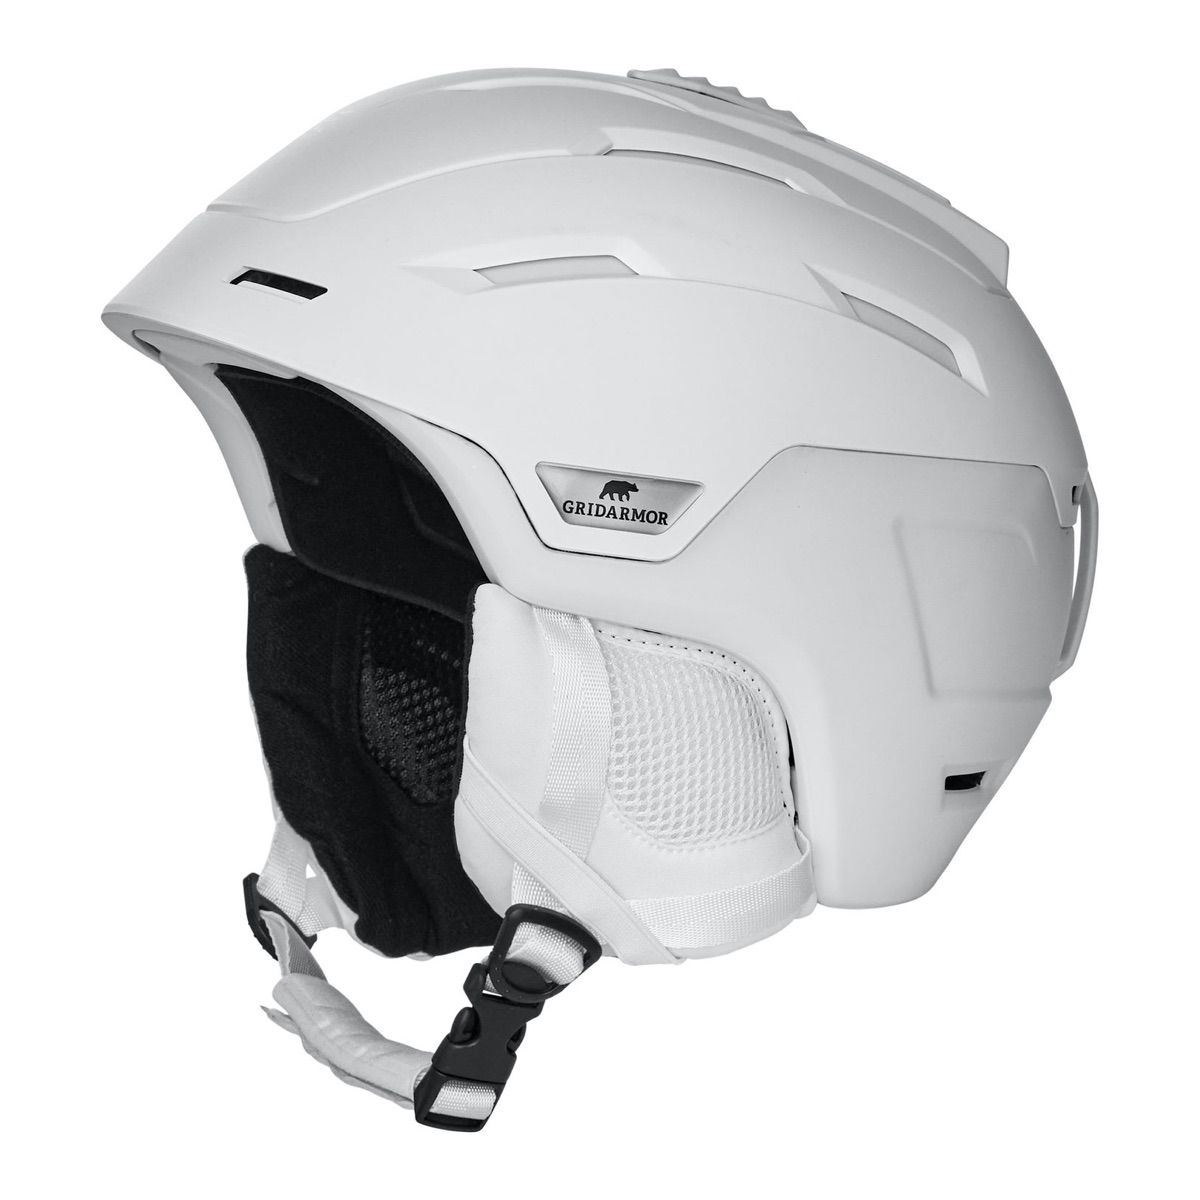 Gridarmor Hafjell Alpine Helmet White